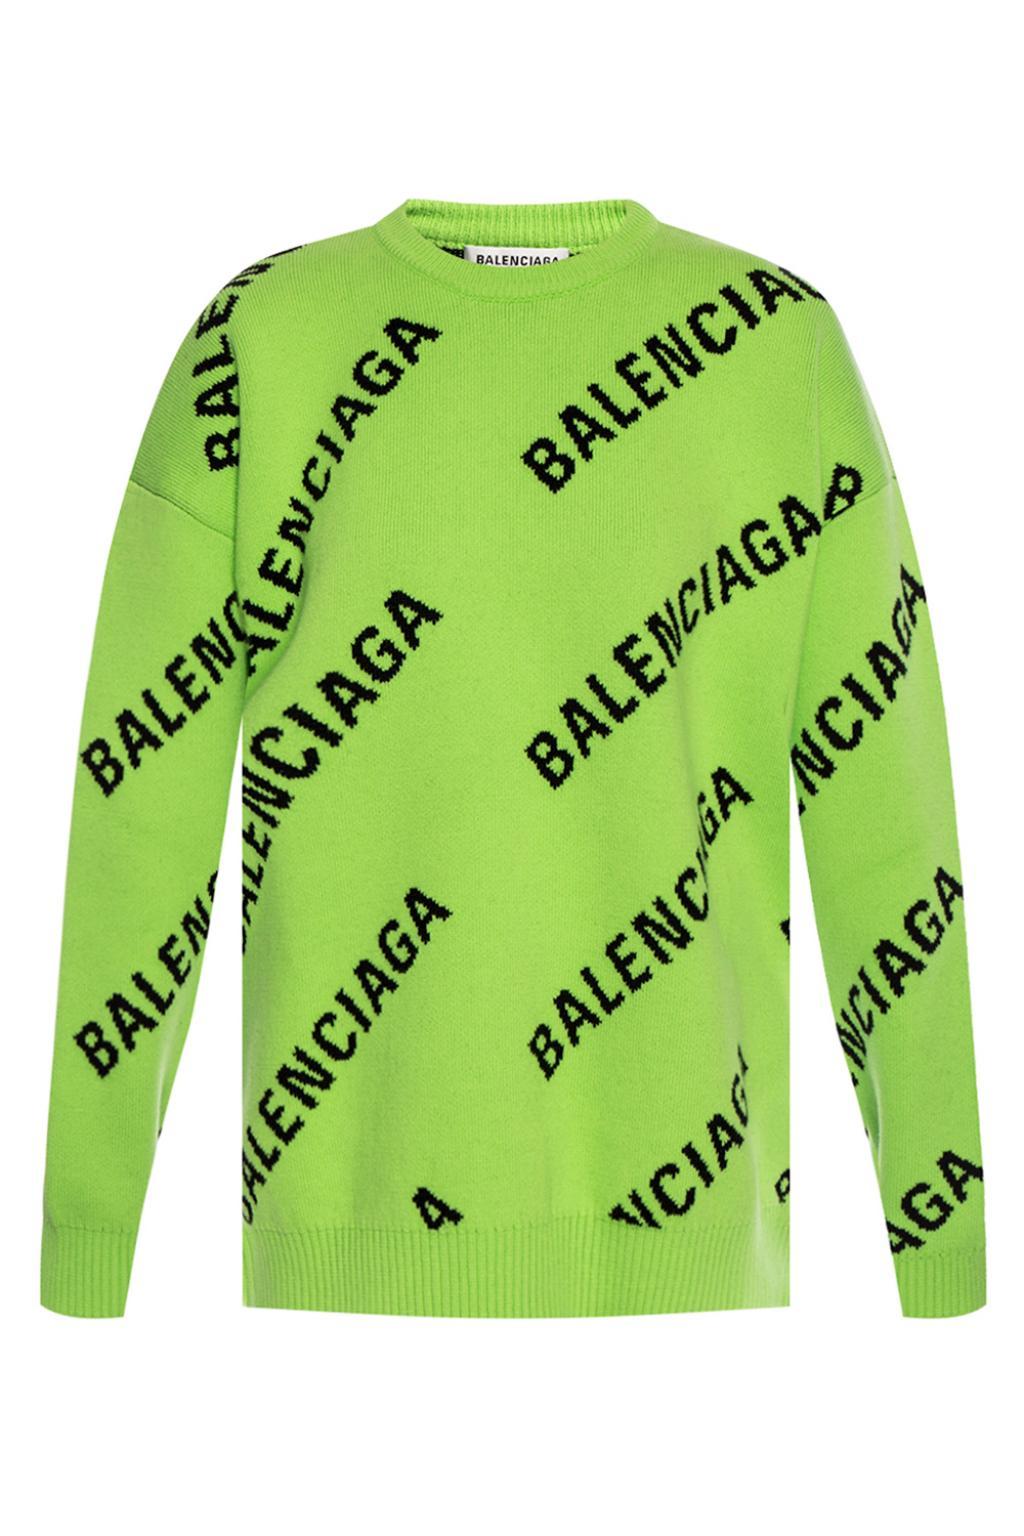 satış planı sistematik Yüzeysel balenciaga neon green sweatshirt Bağlantı  talep yabancılaştırma